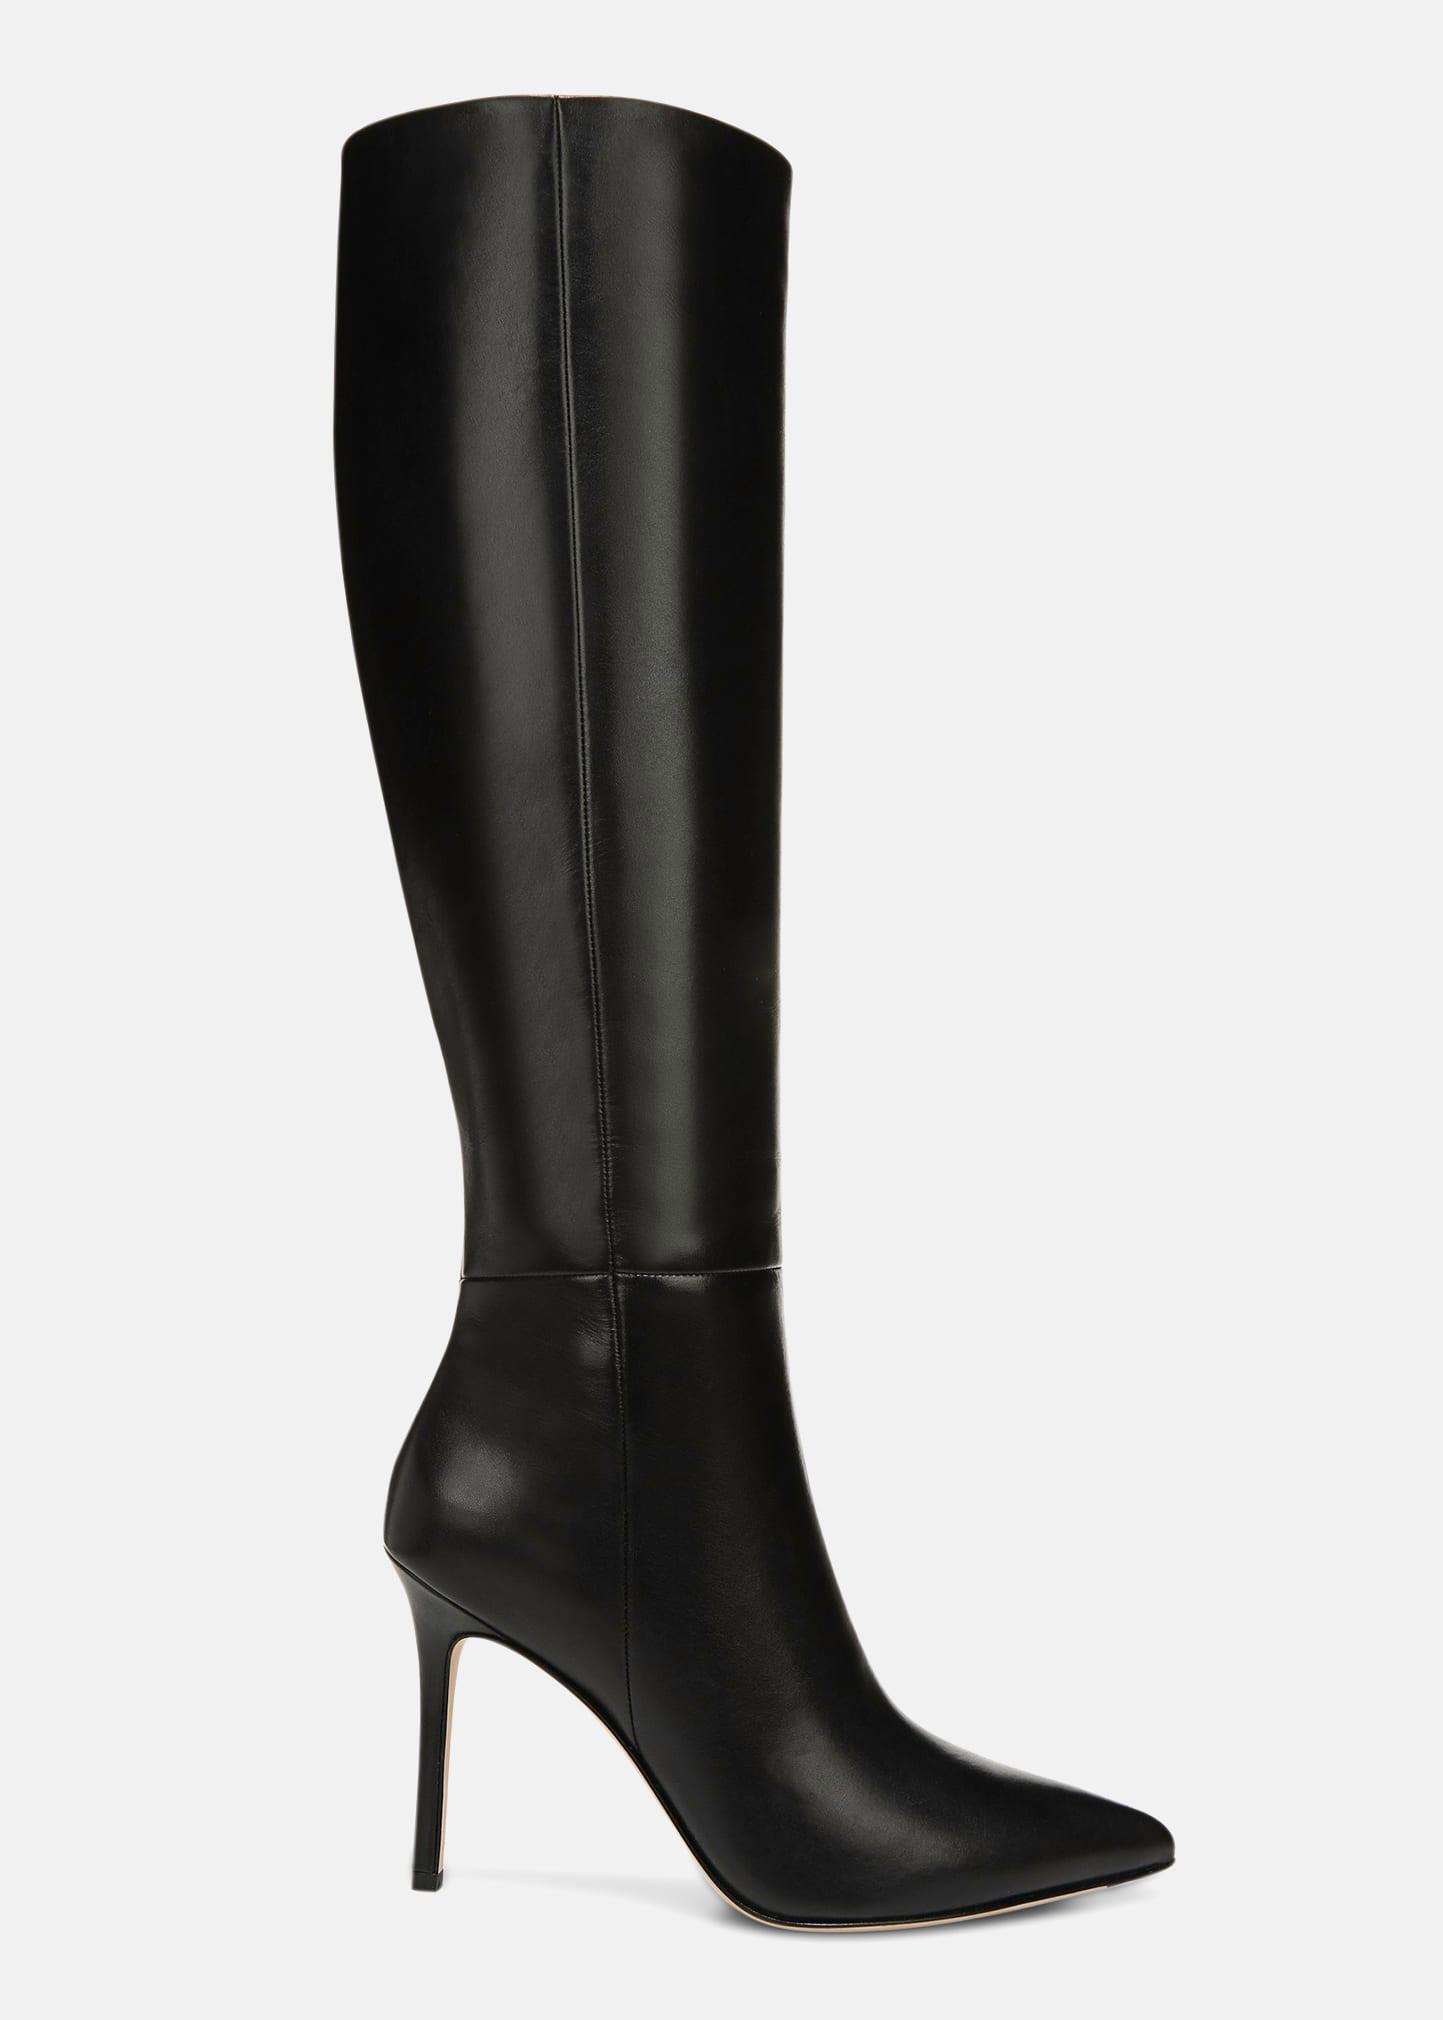 Veronica Beard Lisa Leather Stiletto Boots in Black | Lyst